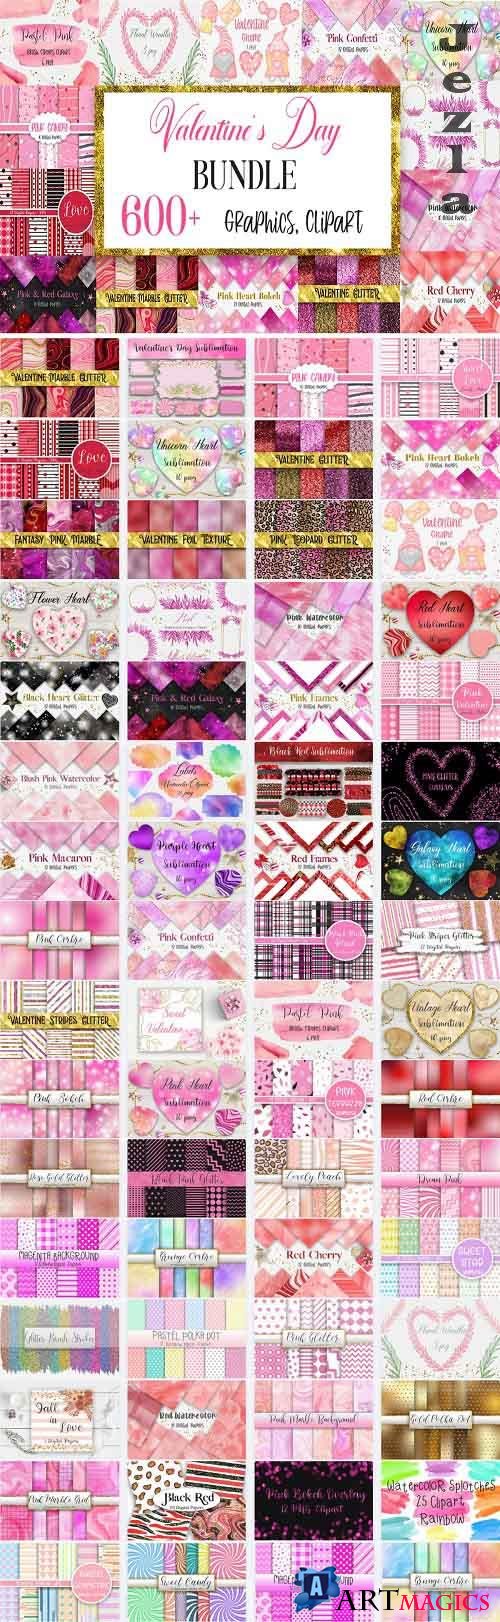 Valentines Day Graphics Bundle - 62 Premium Graphics